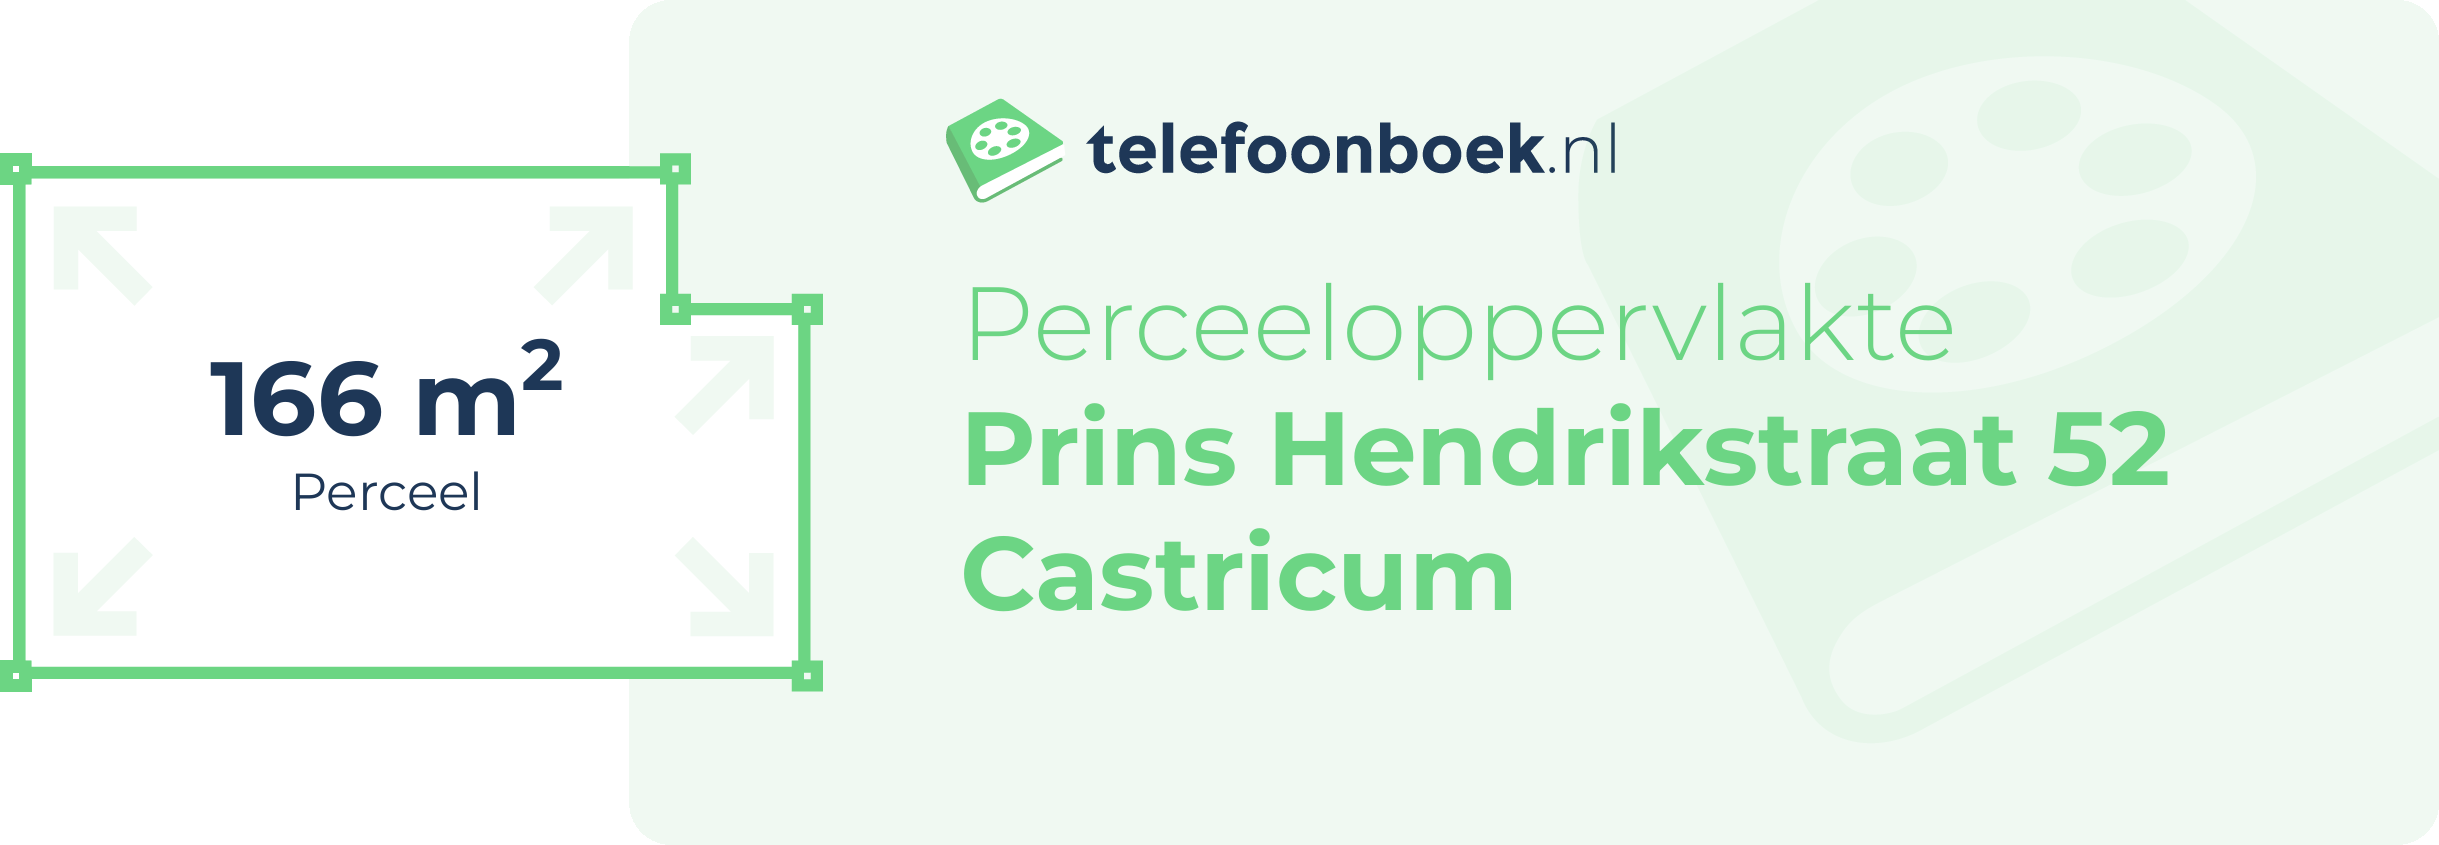 Perceeloppervlakte Prins Hendrikstraat 52 Castricum